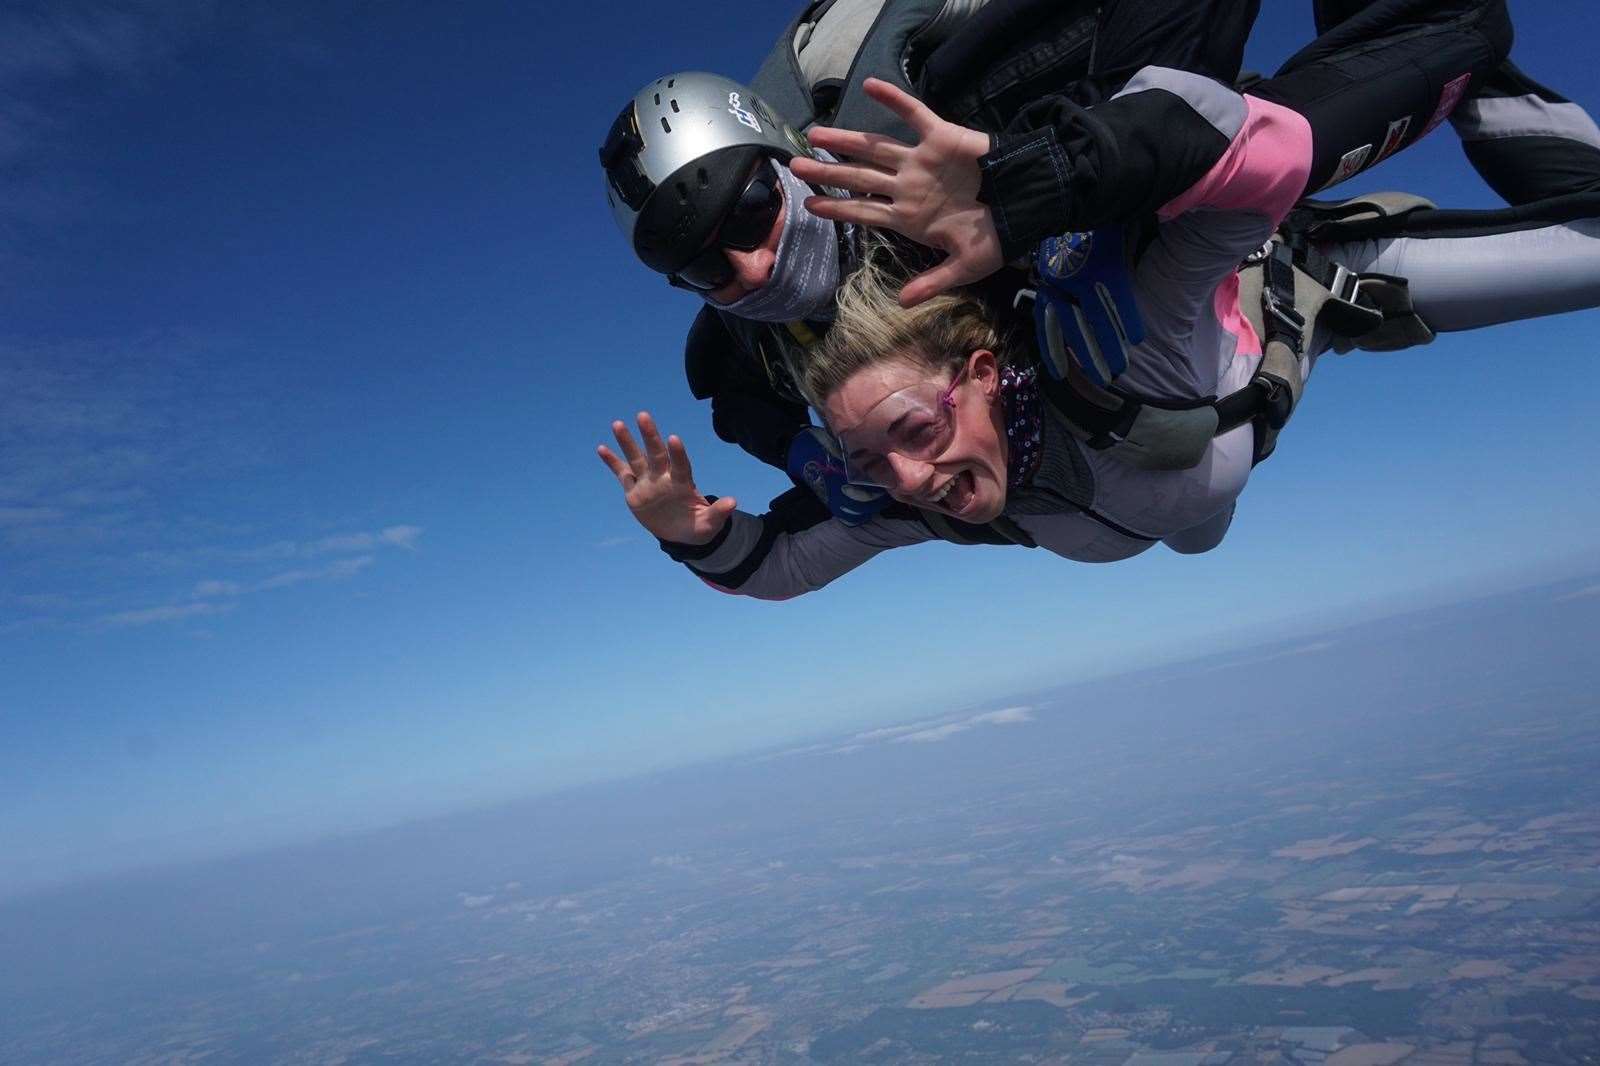 Carys' hair-raising skydive to raise money for Sands